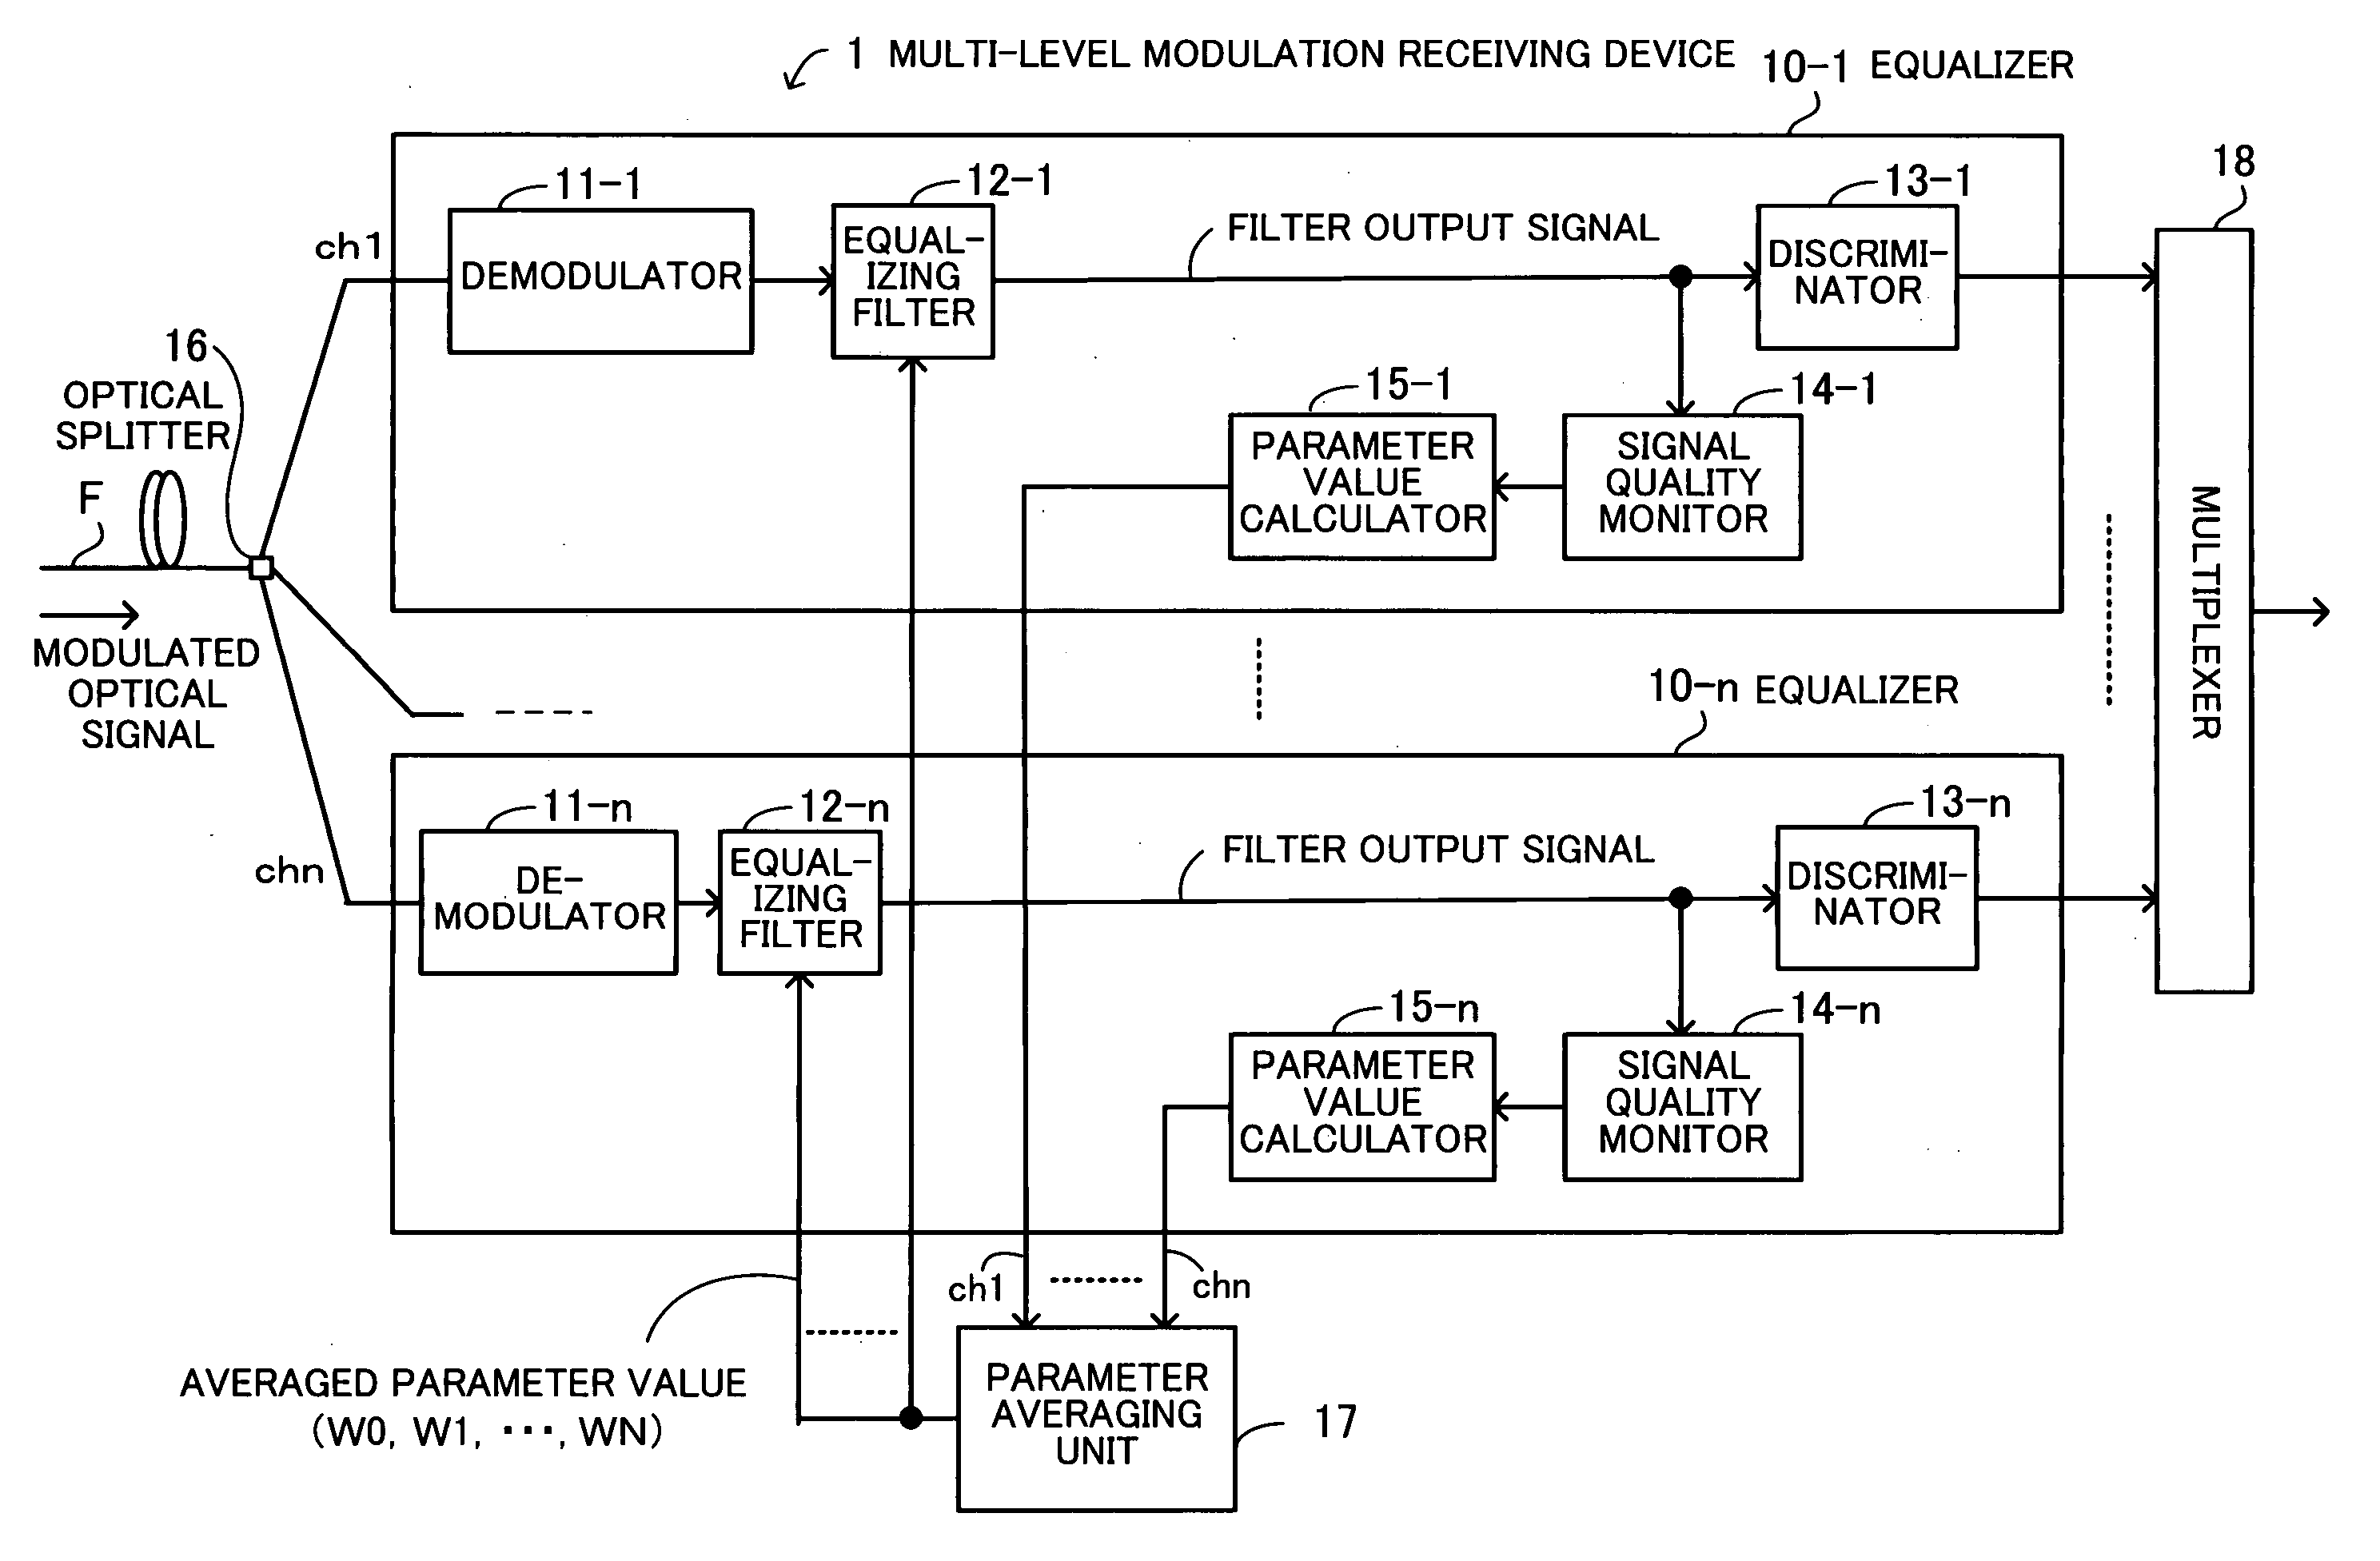 Multi-level modulation receiving device